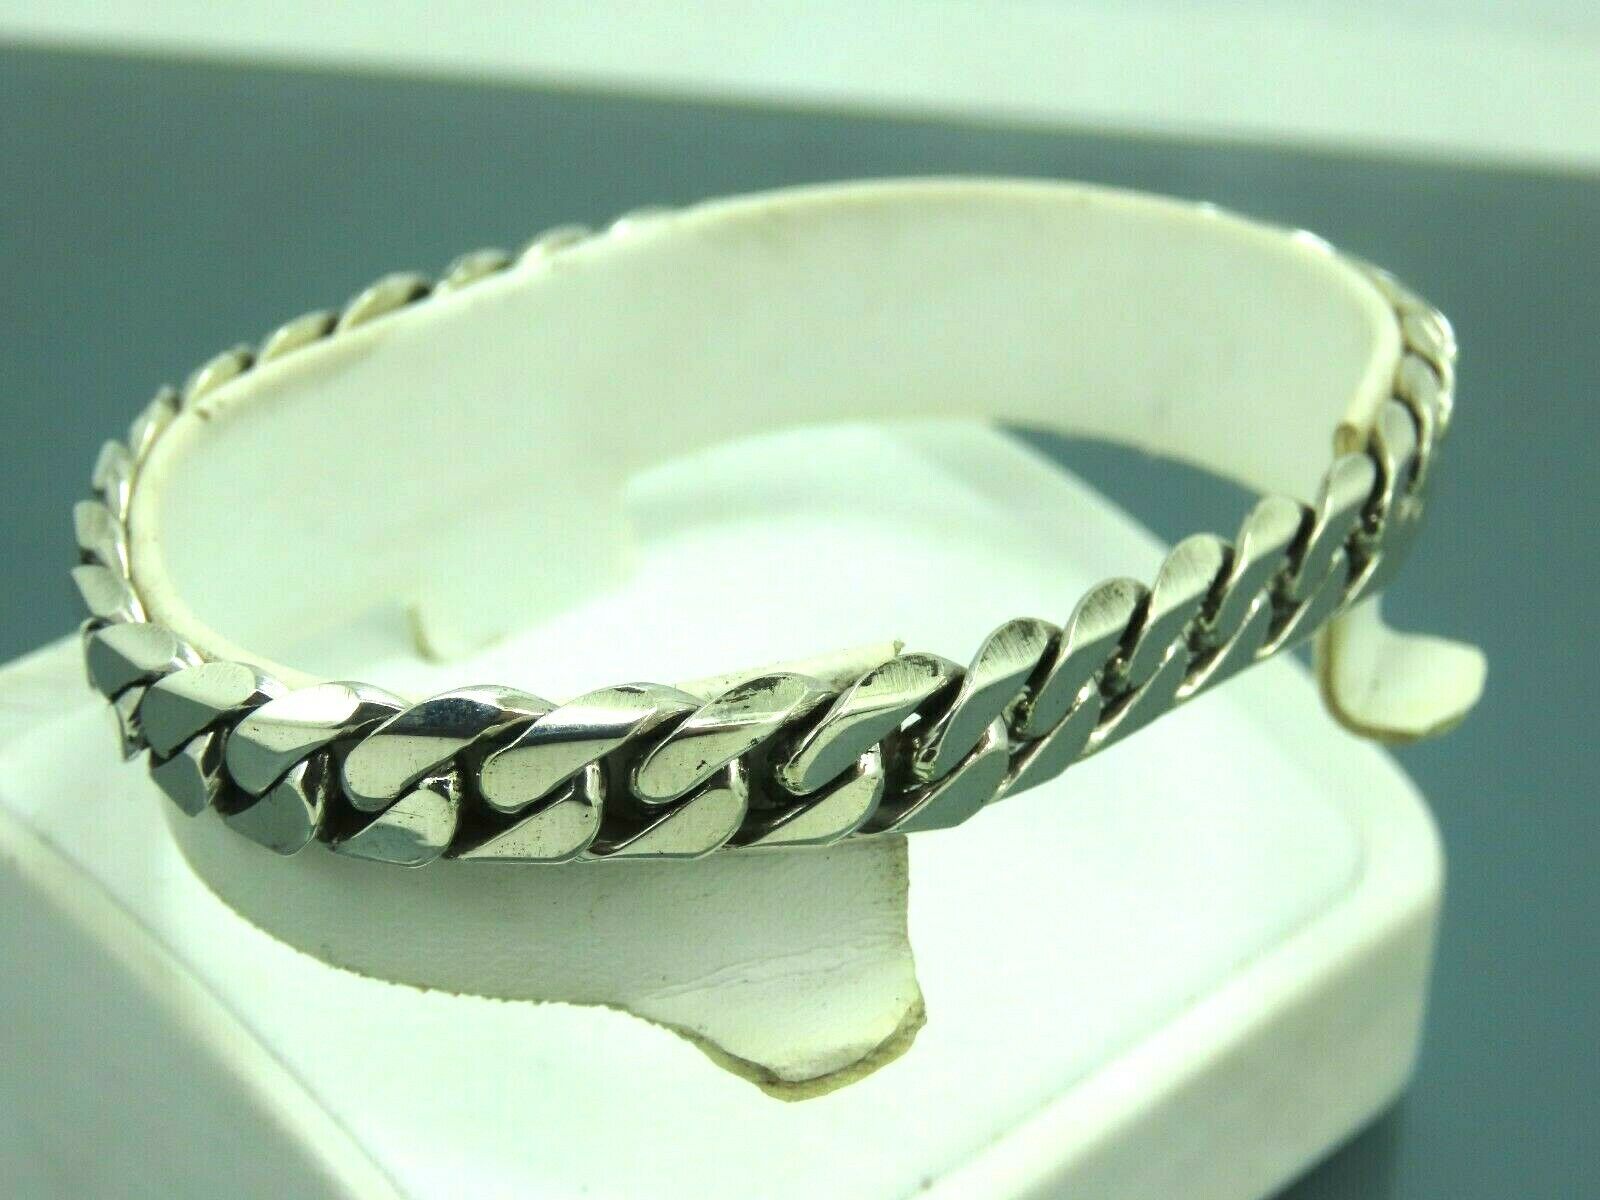 Embedded Diamond Link Bracelet